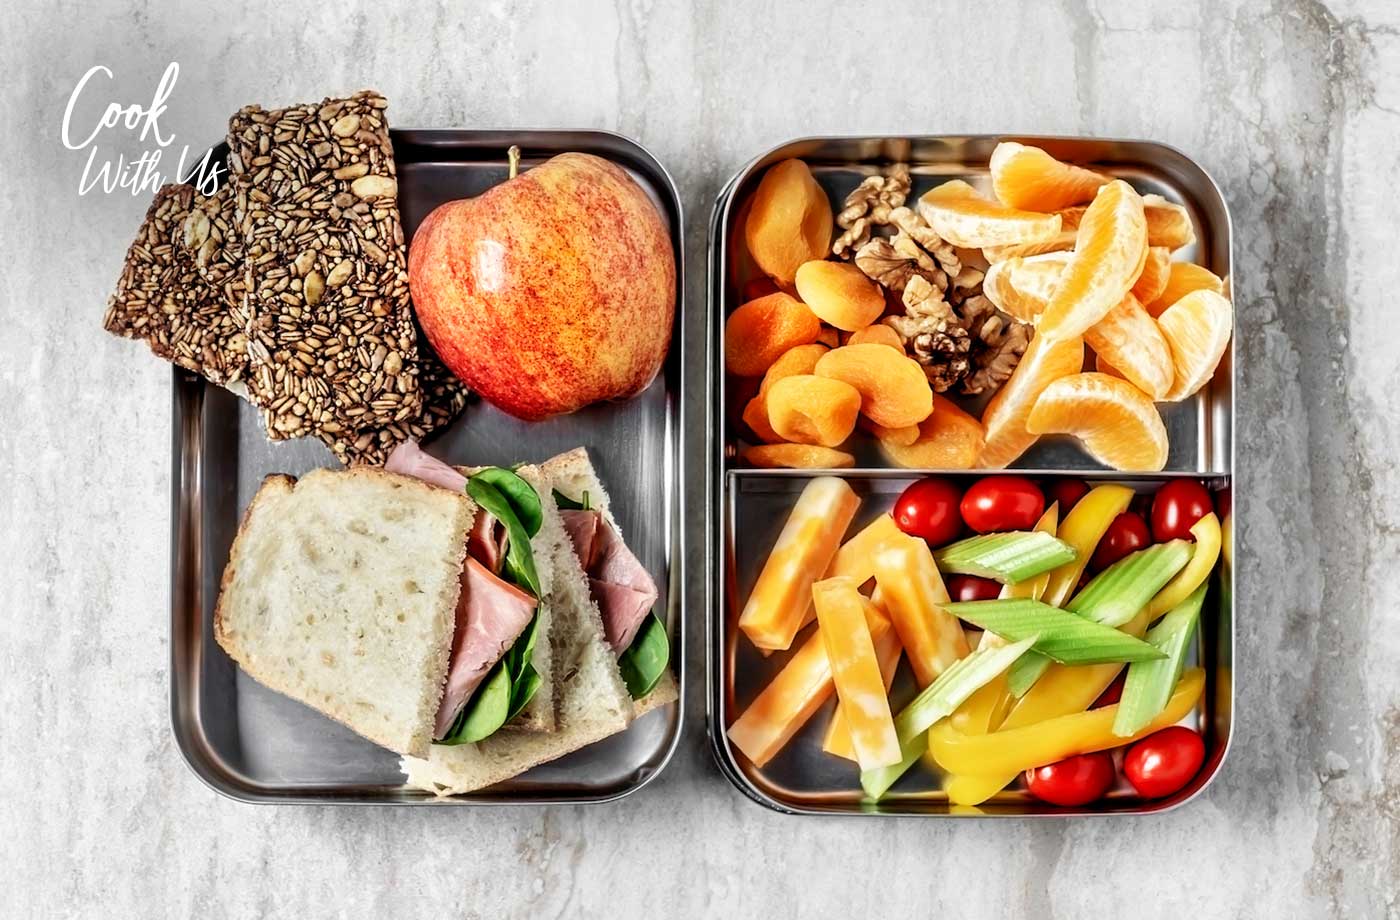 https://www.wellandgood.com/wp-content/uploads/2019/07/CookWithUs-GettyImages-healthy-lunchables-idea-ClaudiaTotir.jpeg